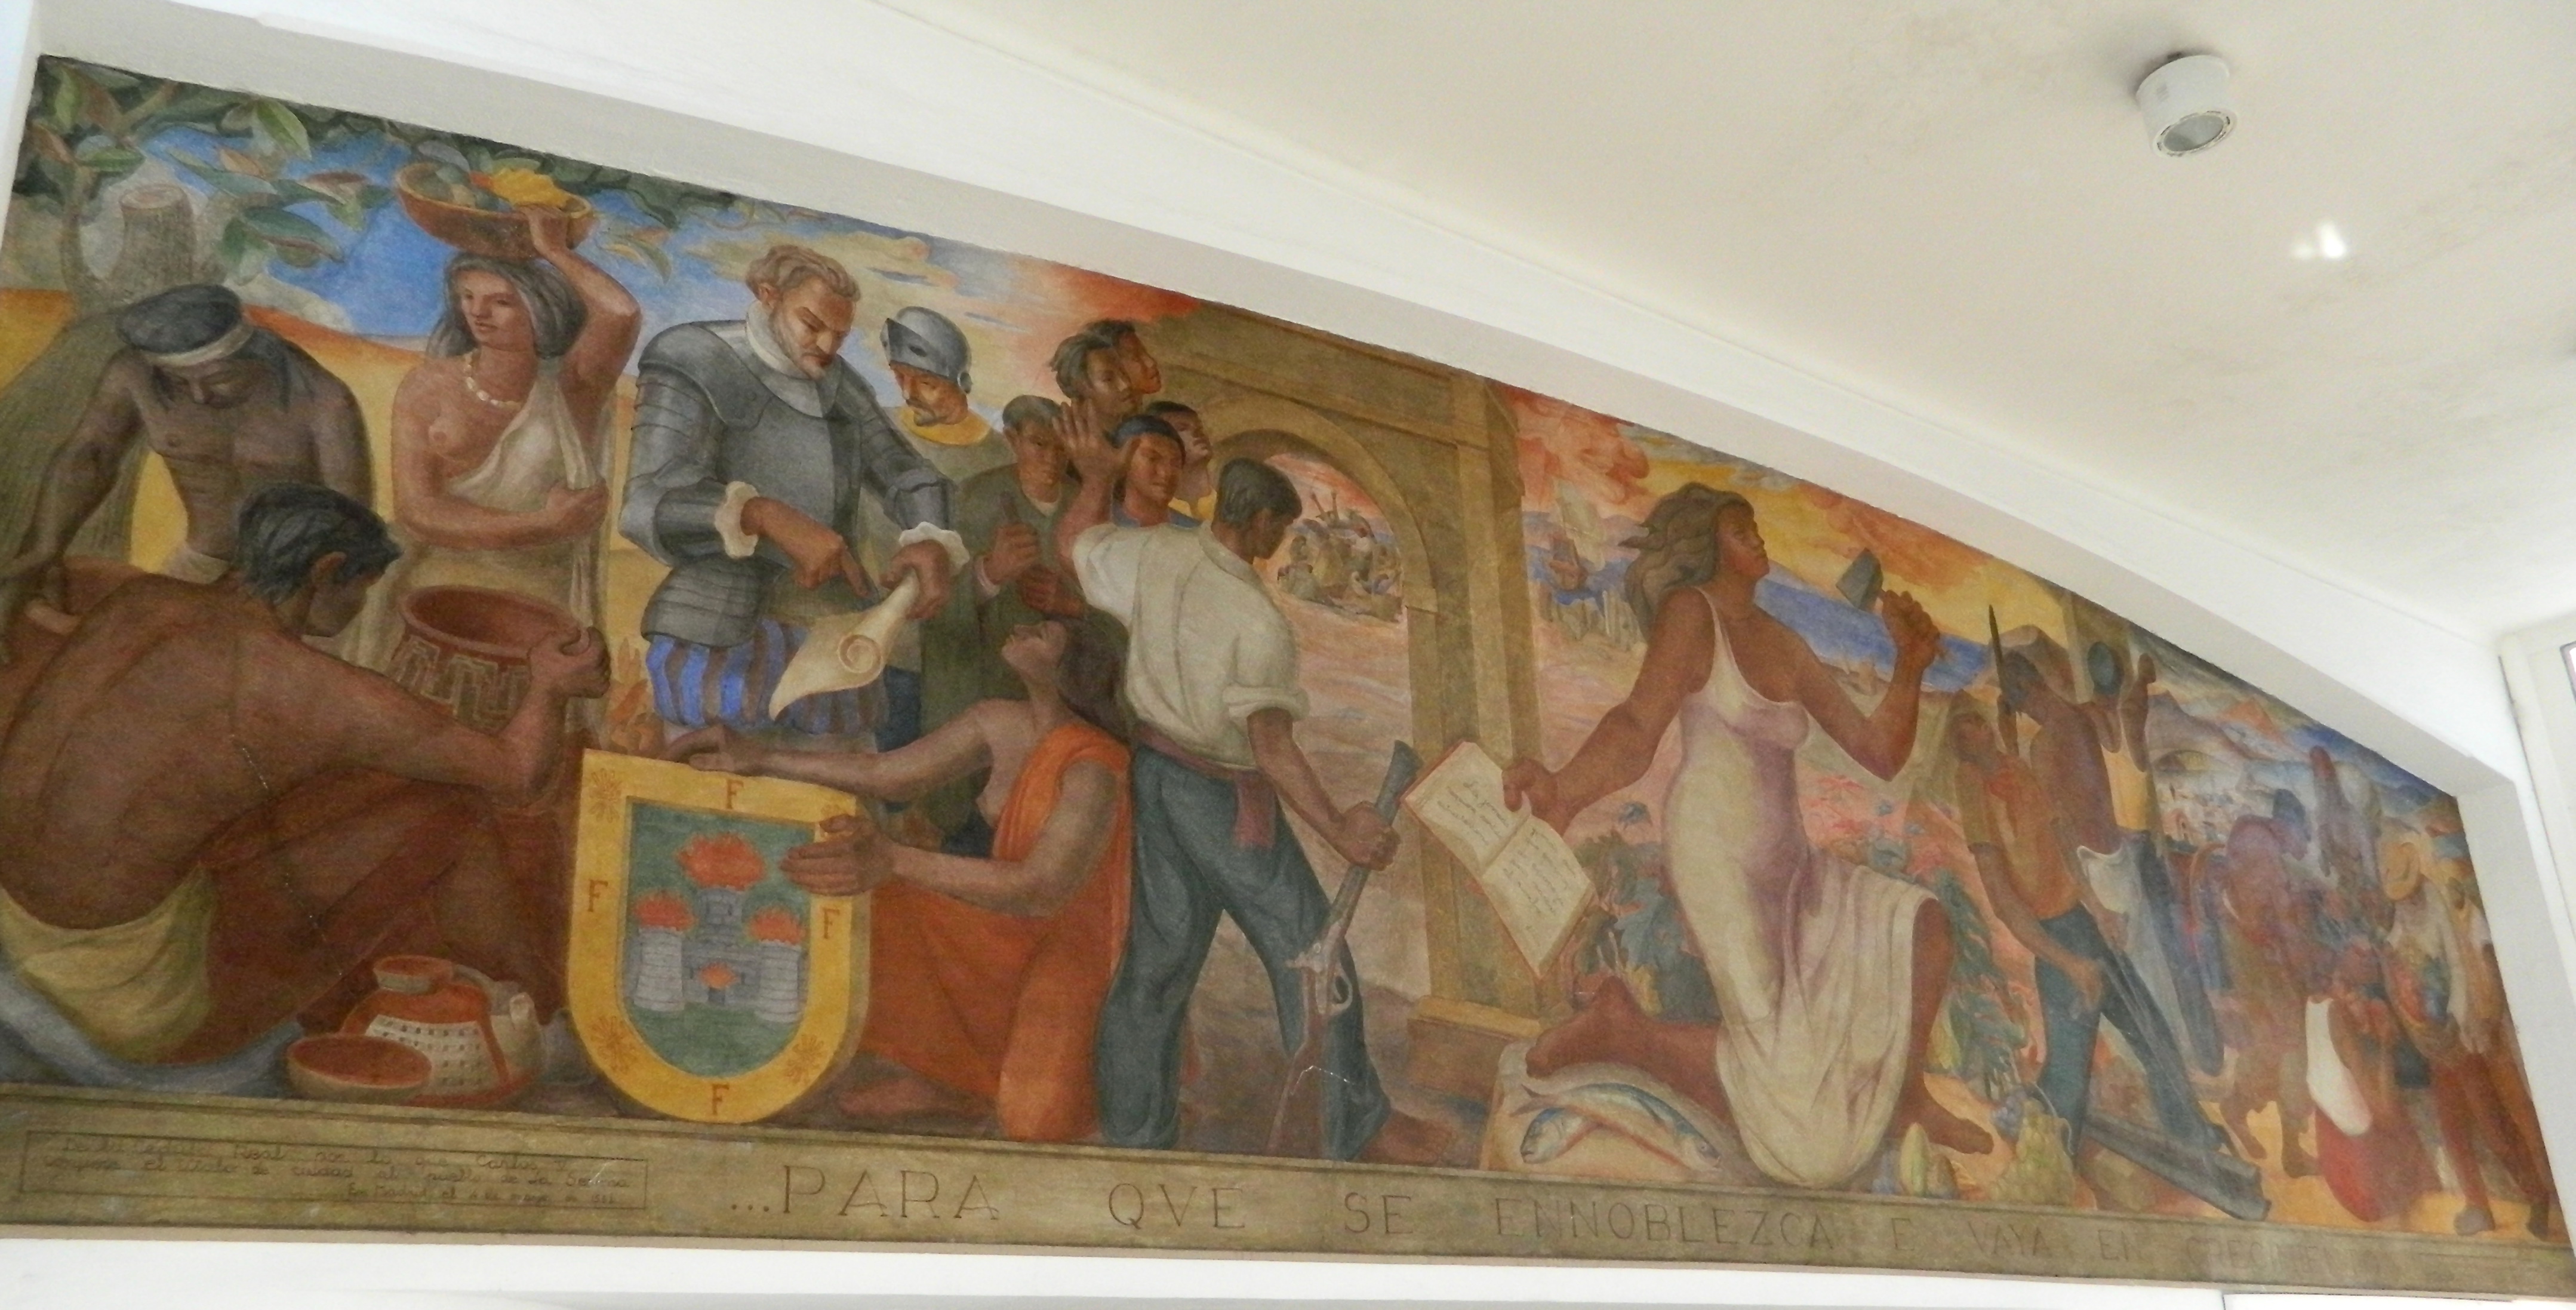 File:Mural Historia de La Serena, panoramica.jpg - Wikimedia Commons